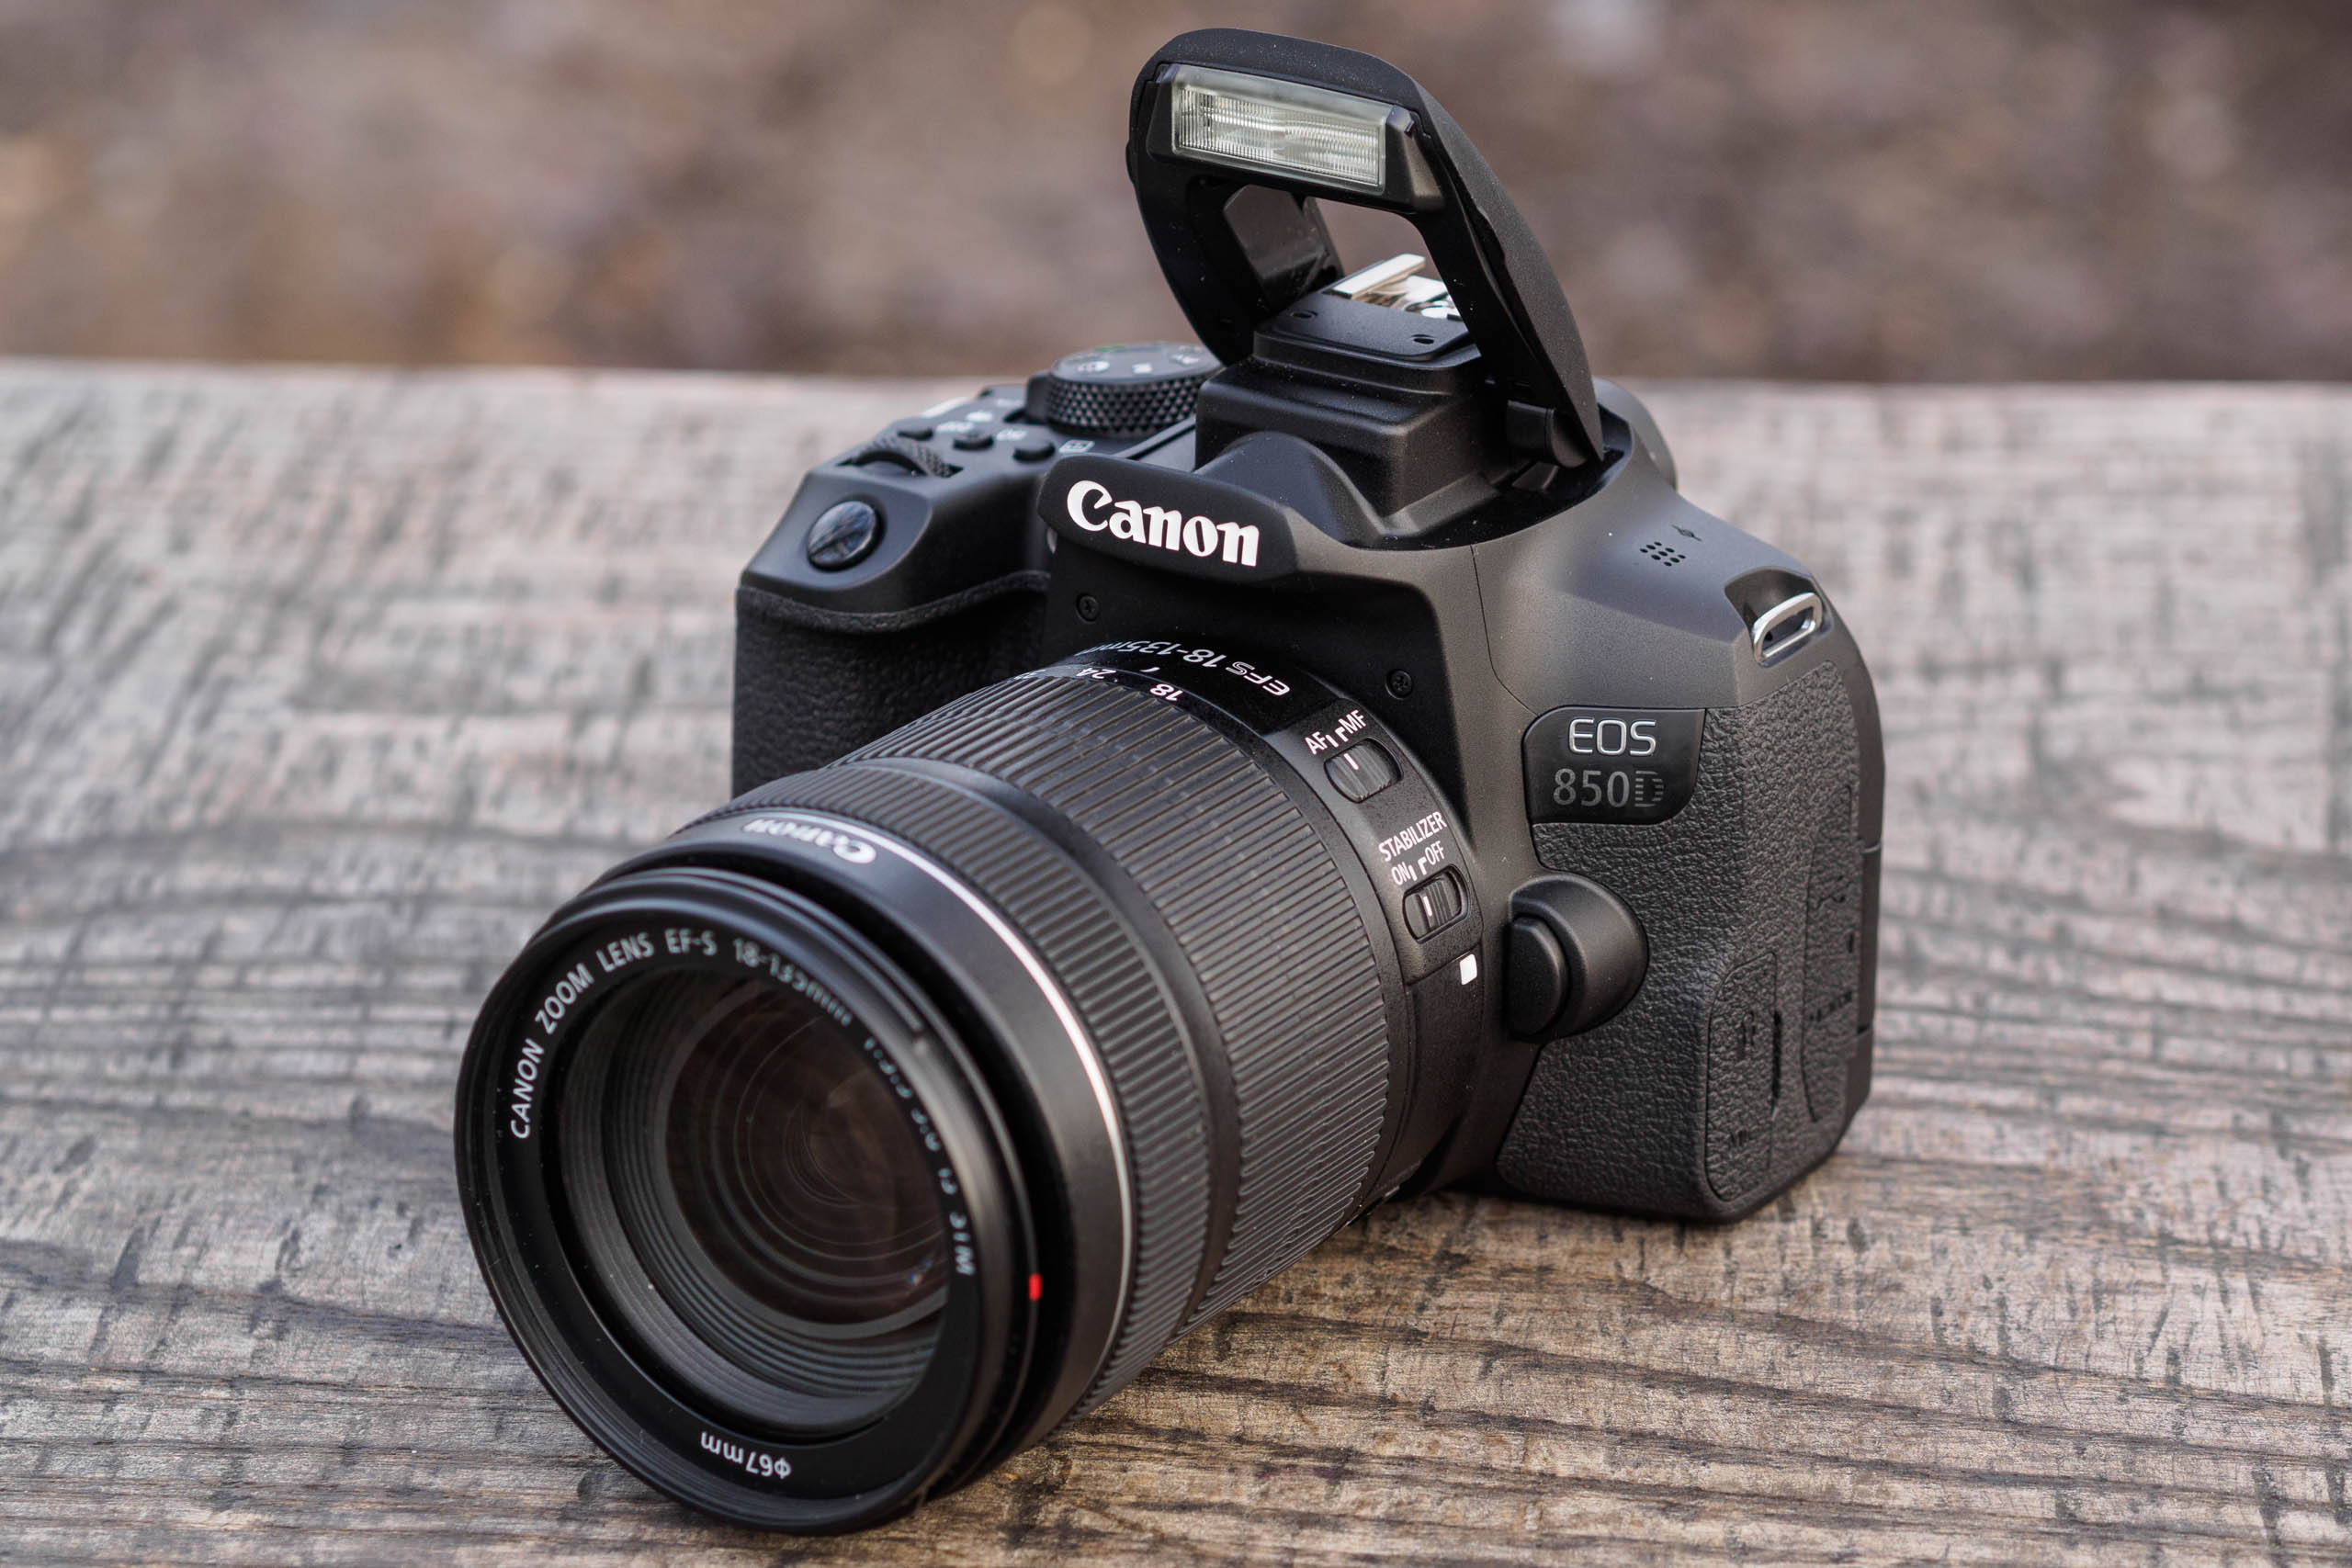 Canon EOS 2000D 24MP Digital SLR Camera Lens18-55mm